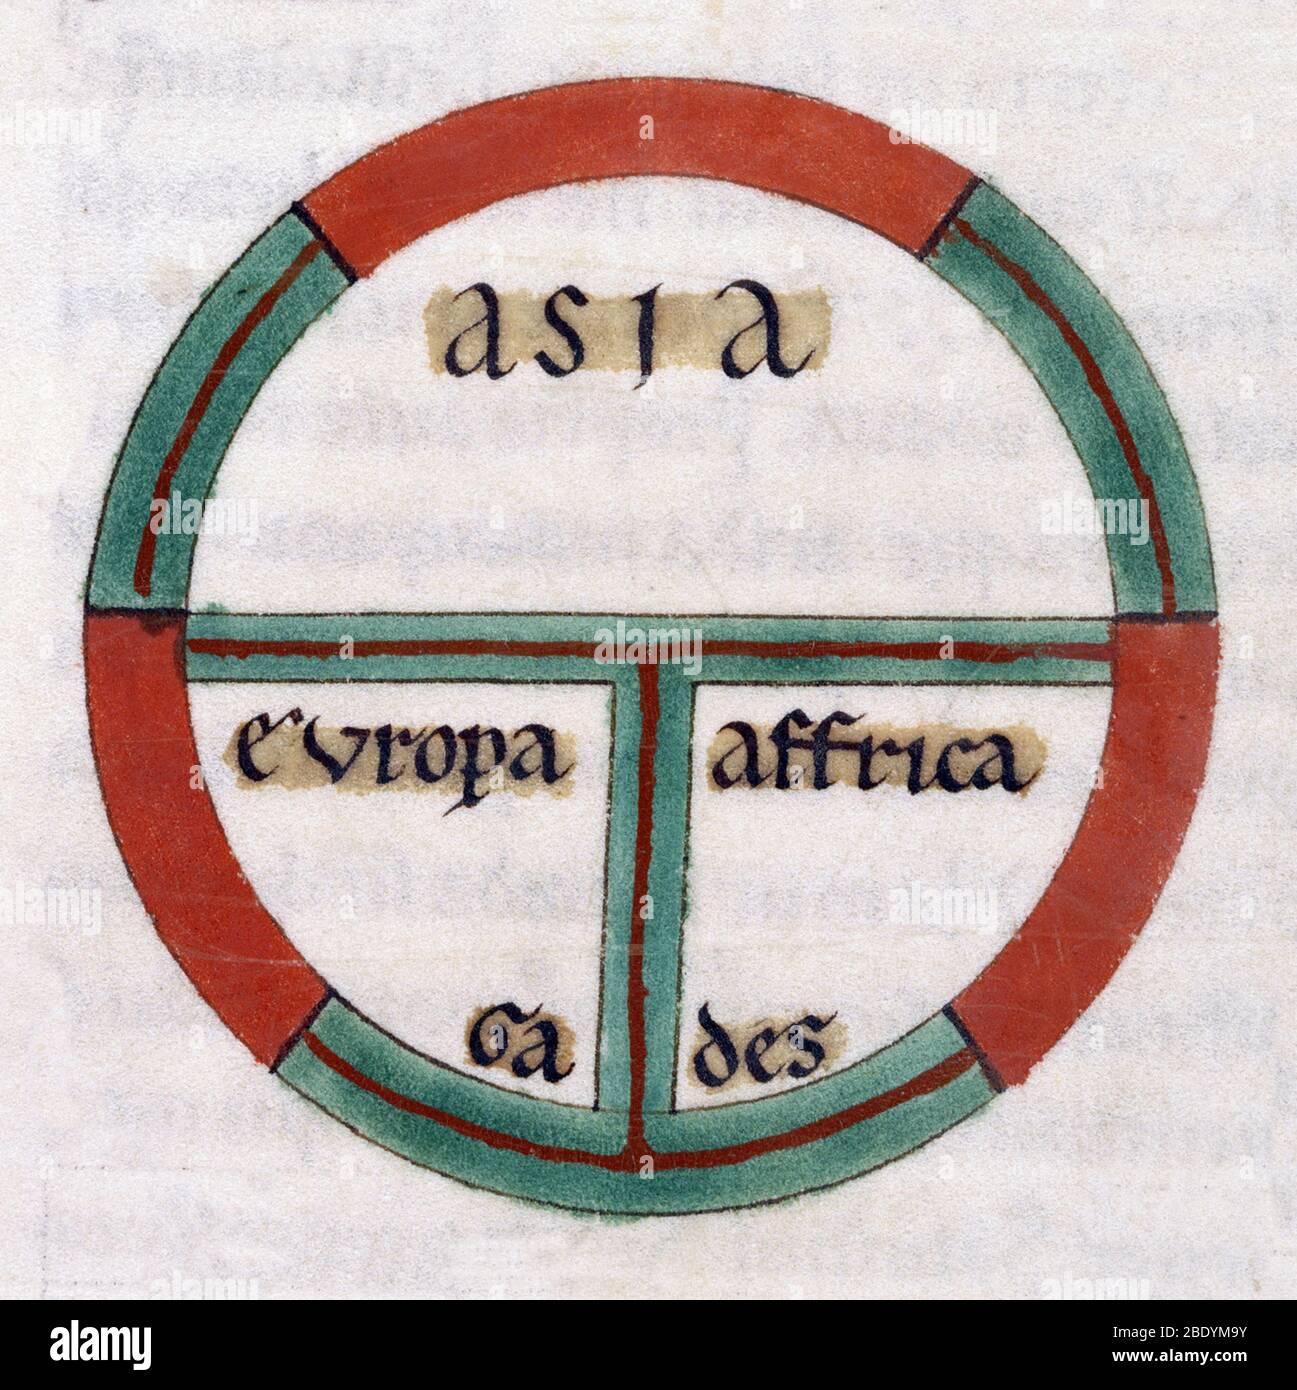 Mapa del Mundo medieval, siglo XIII Foto de stock